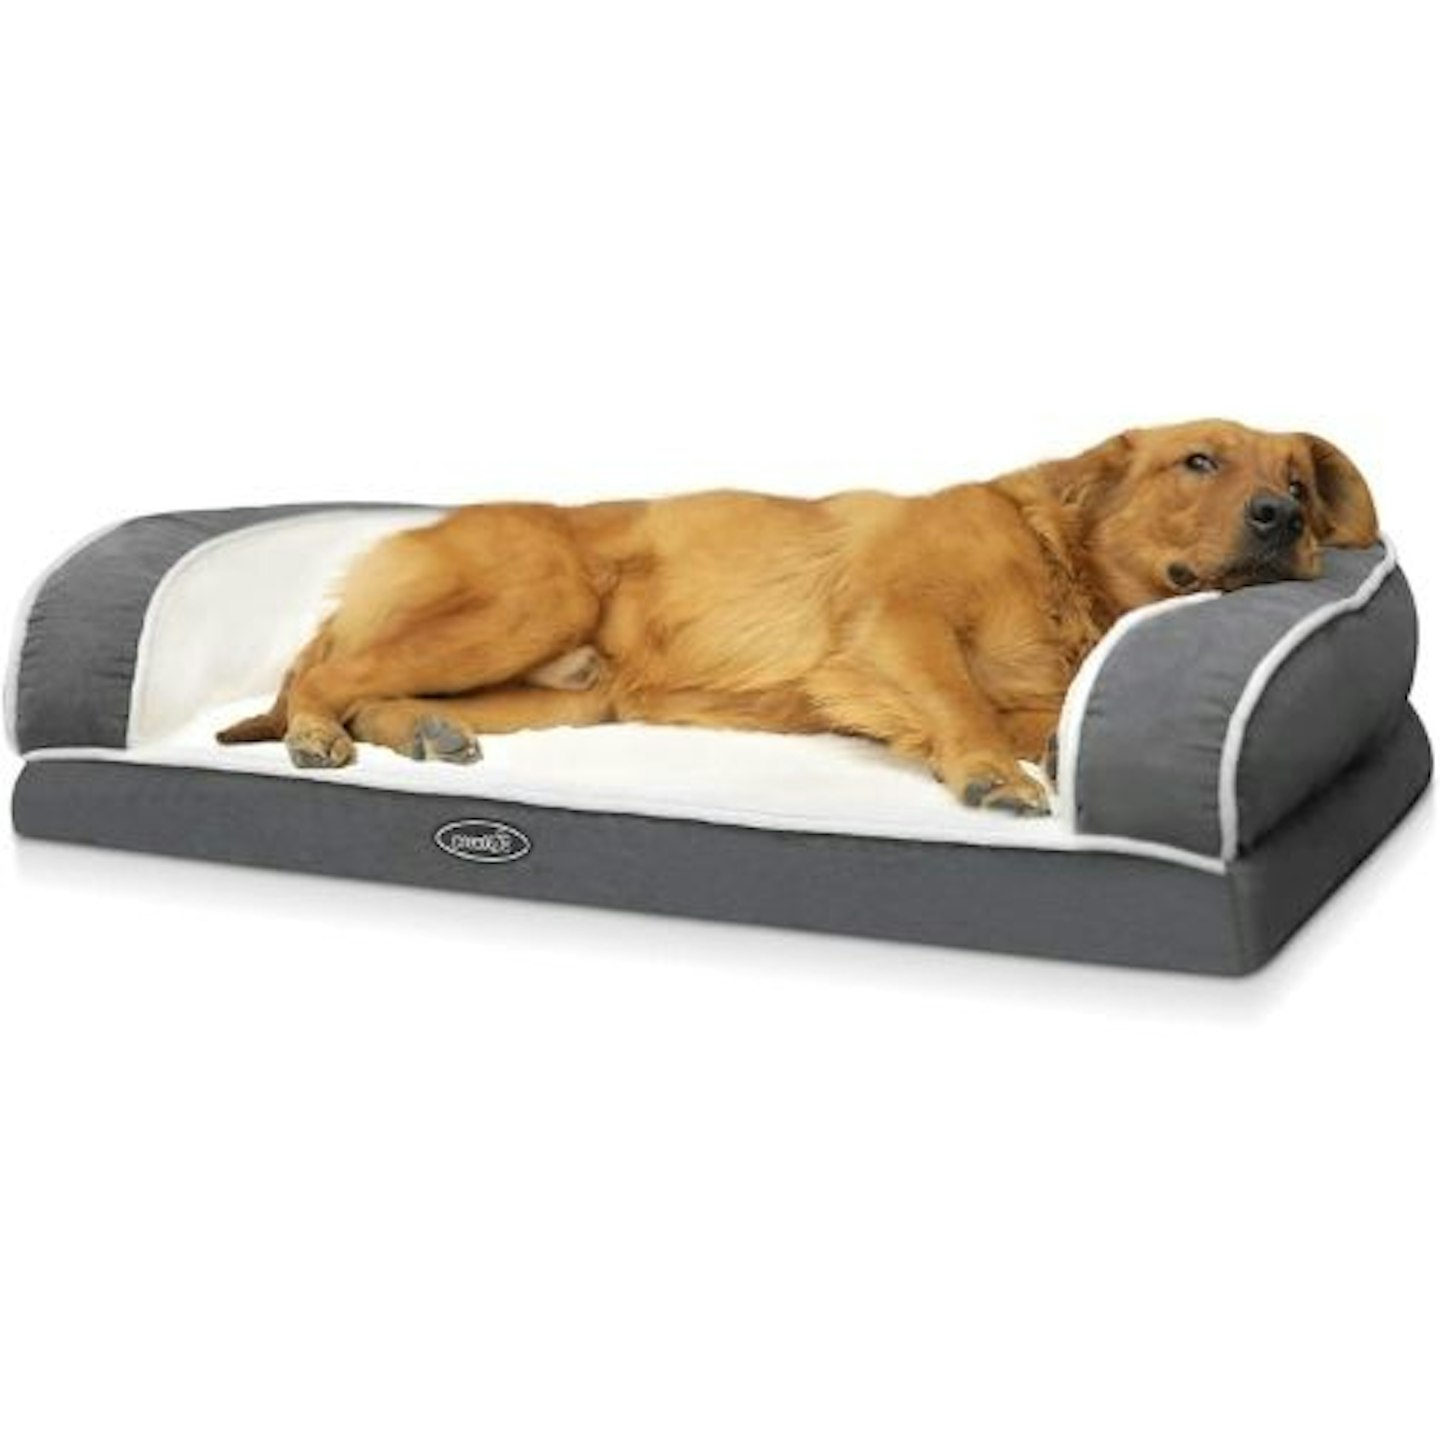 pecute Orthopedic Dog Sofa Bed